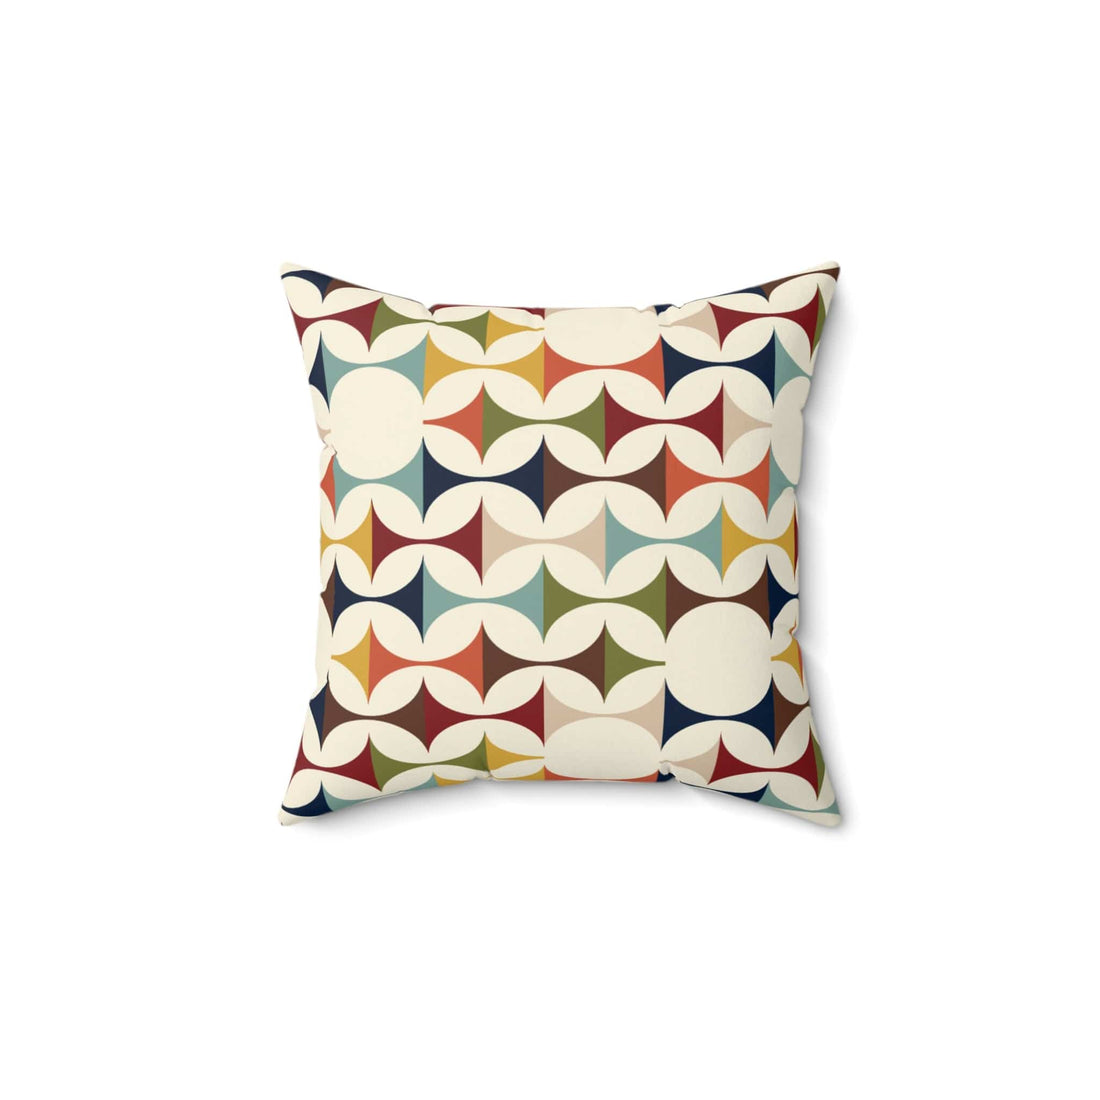 Kate McEnroe New York Mid Century Modern Geometric Throw Pillow with Insert, Retro 60s Modernist Color Block CushionsThrow Pillows22304436858549412257